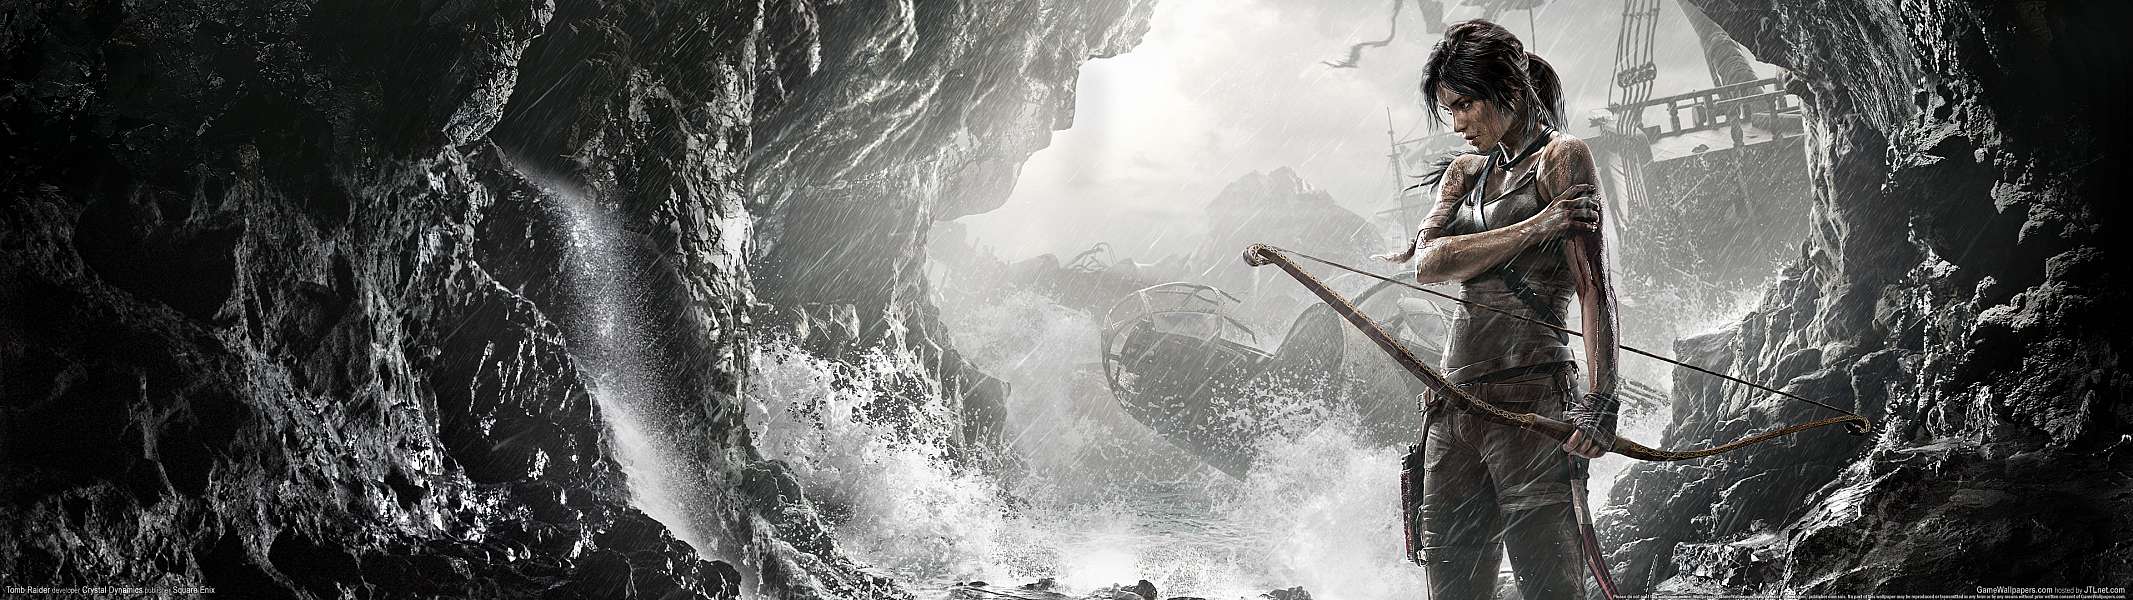 Tomb Raider dual screen achtergrond